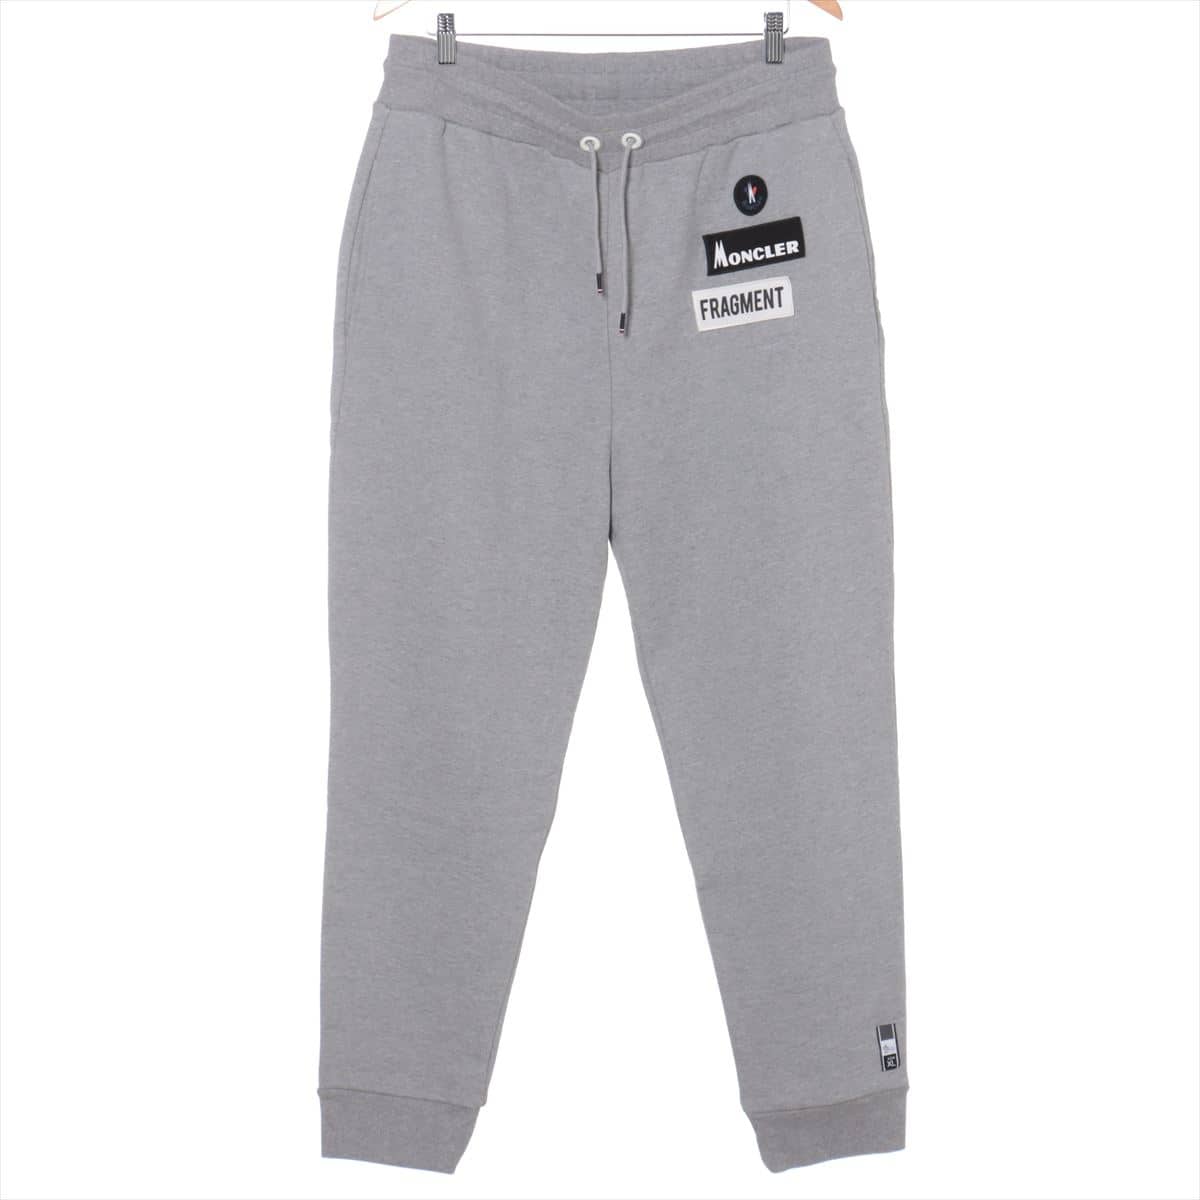 Moncler Genius Fragment 18 years Cotton Sweatpants XL Men's Grey